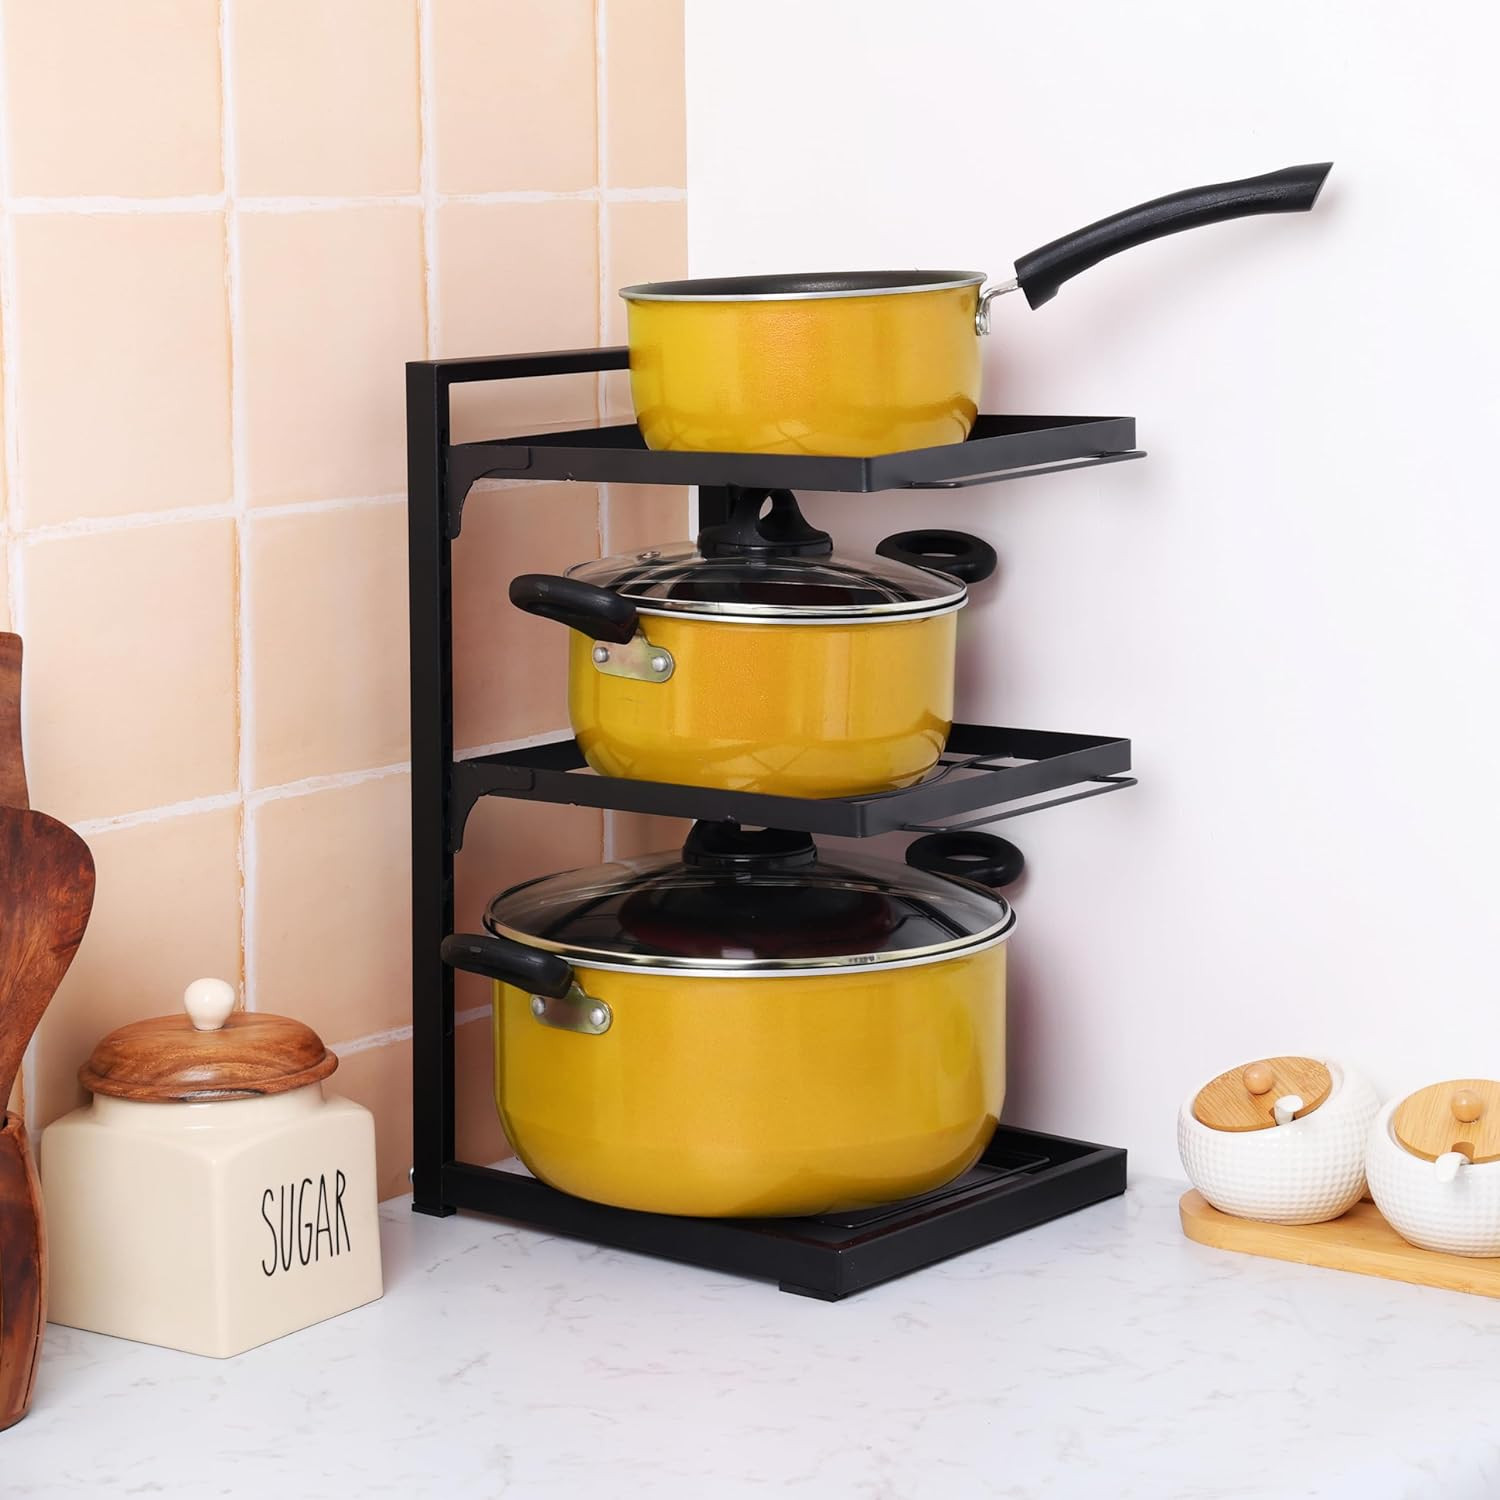 Kuber Industries 3-Layer Pots and Pans Organiser Rack|Kitchen Organization And Storage|Adjustable Pot Lid Holder Rack|Home Kitchen Accessories (Black)